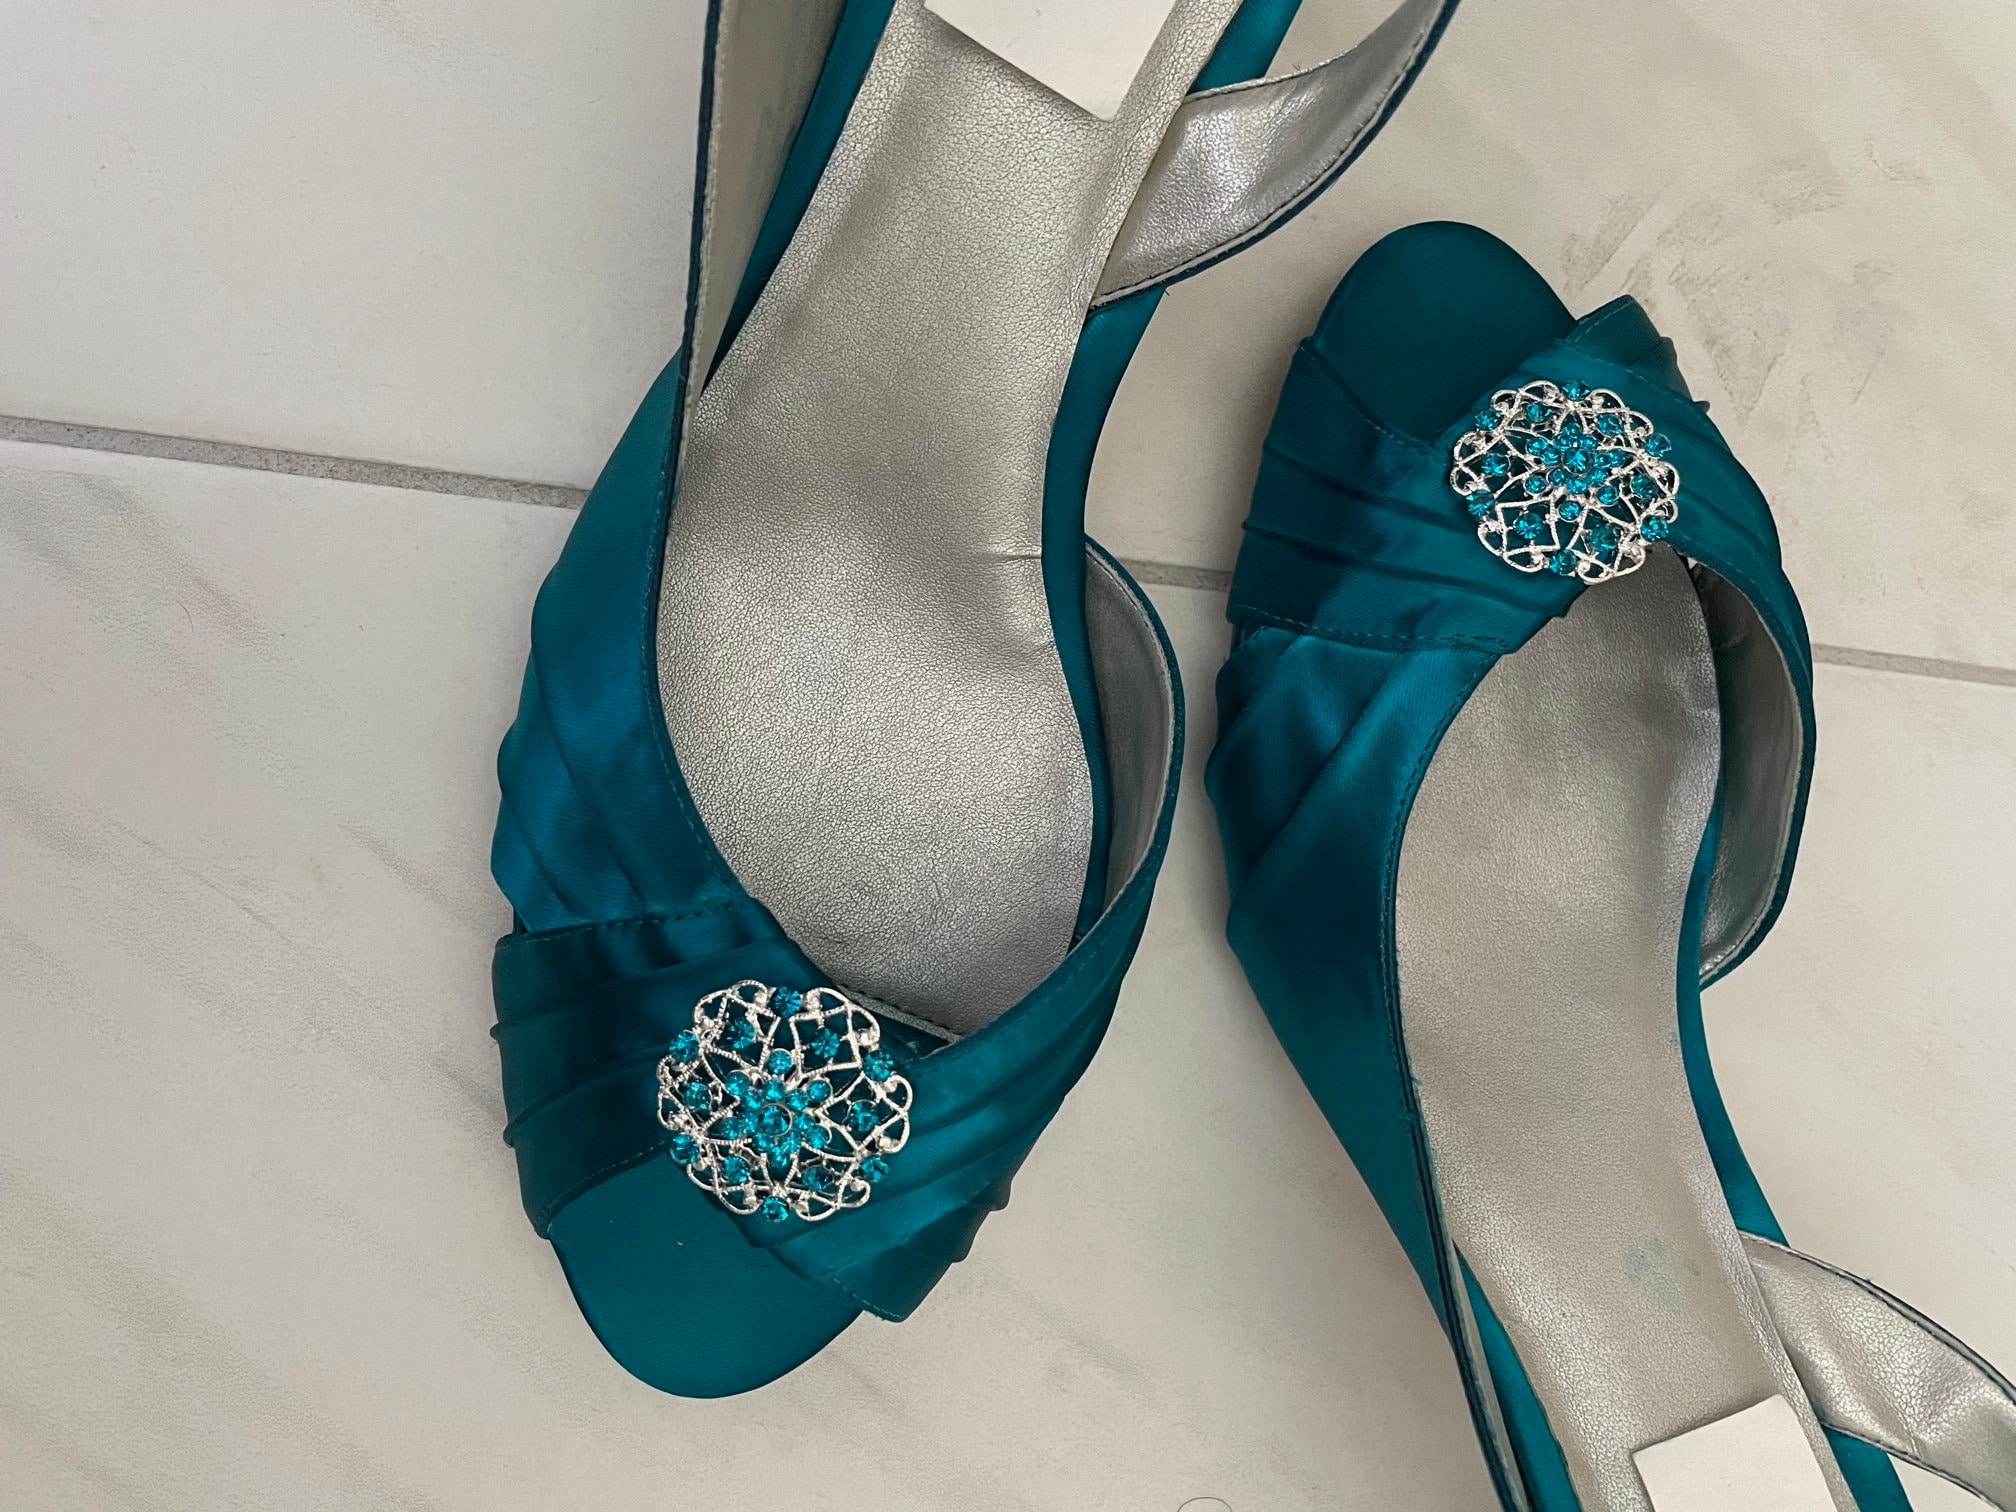 TUOBARR Heels Sandals Women, Women's Fashion Pointed Toe Low Heel Dress  Pumps Shoes Blue - Walmart.com